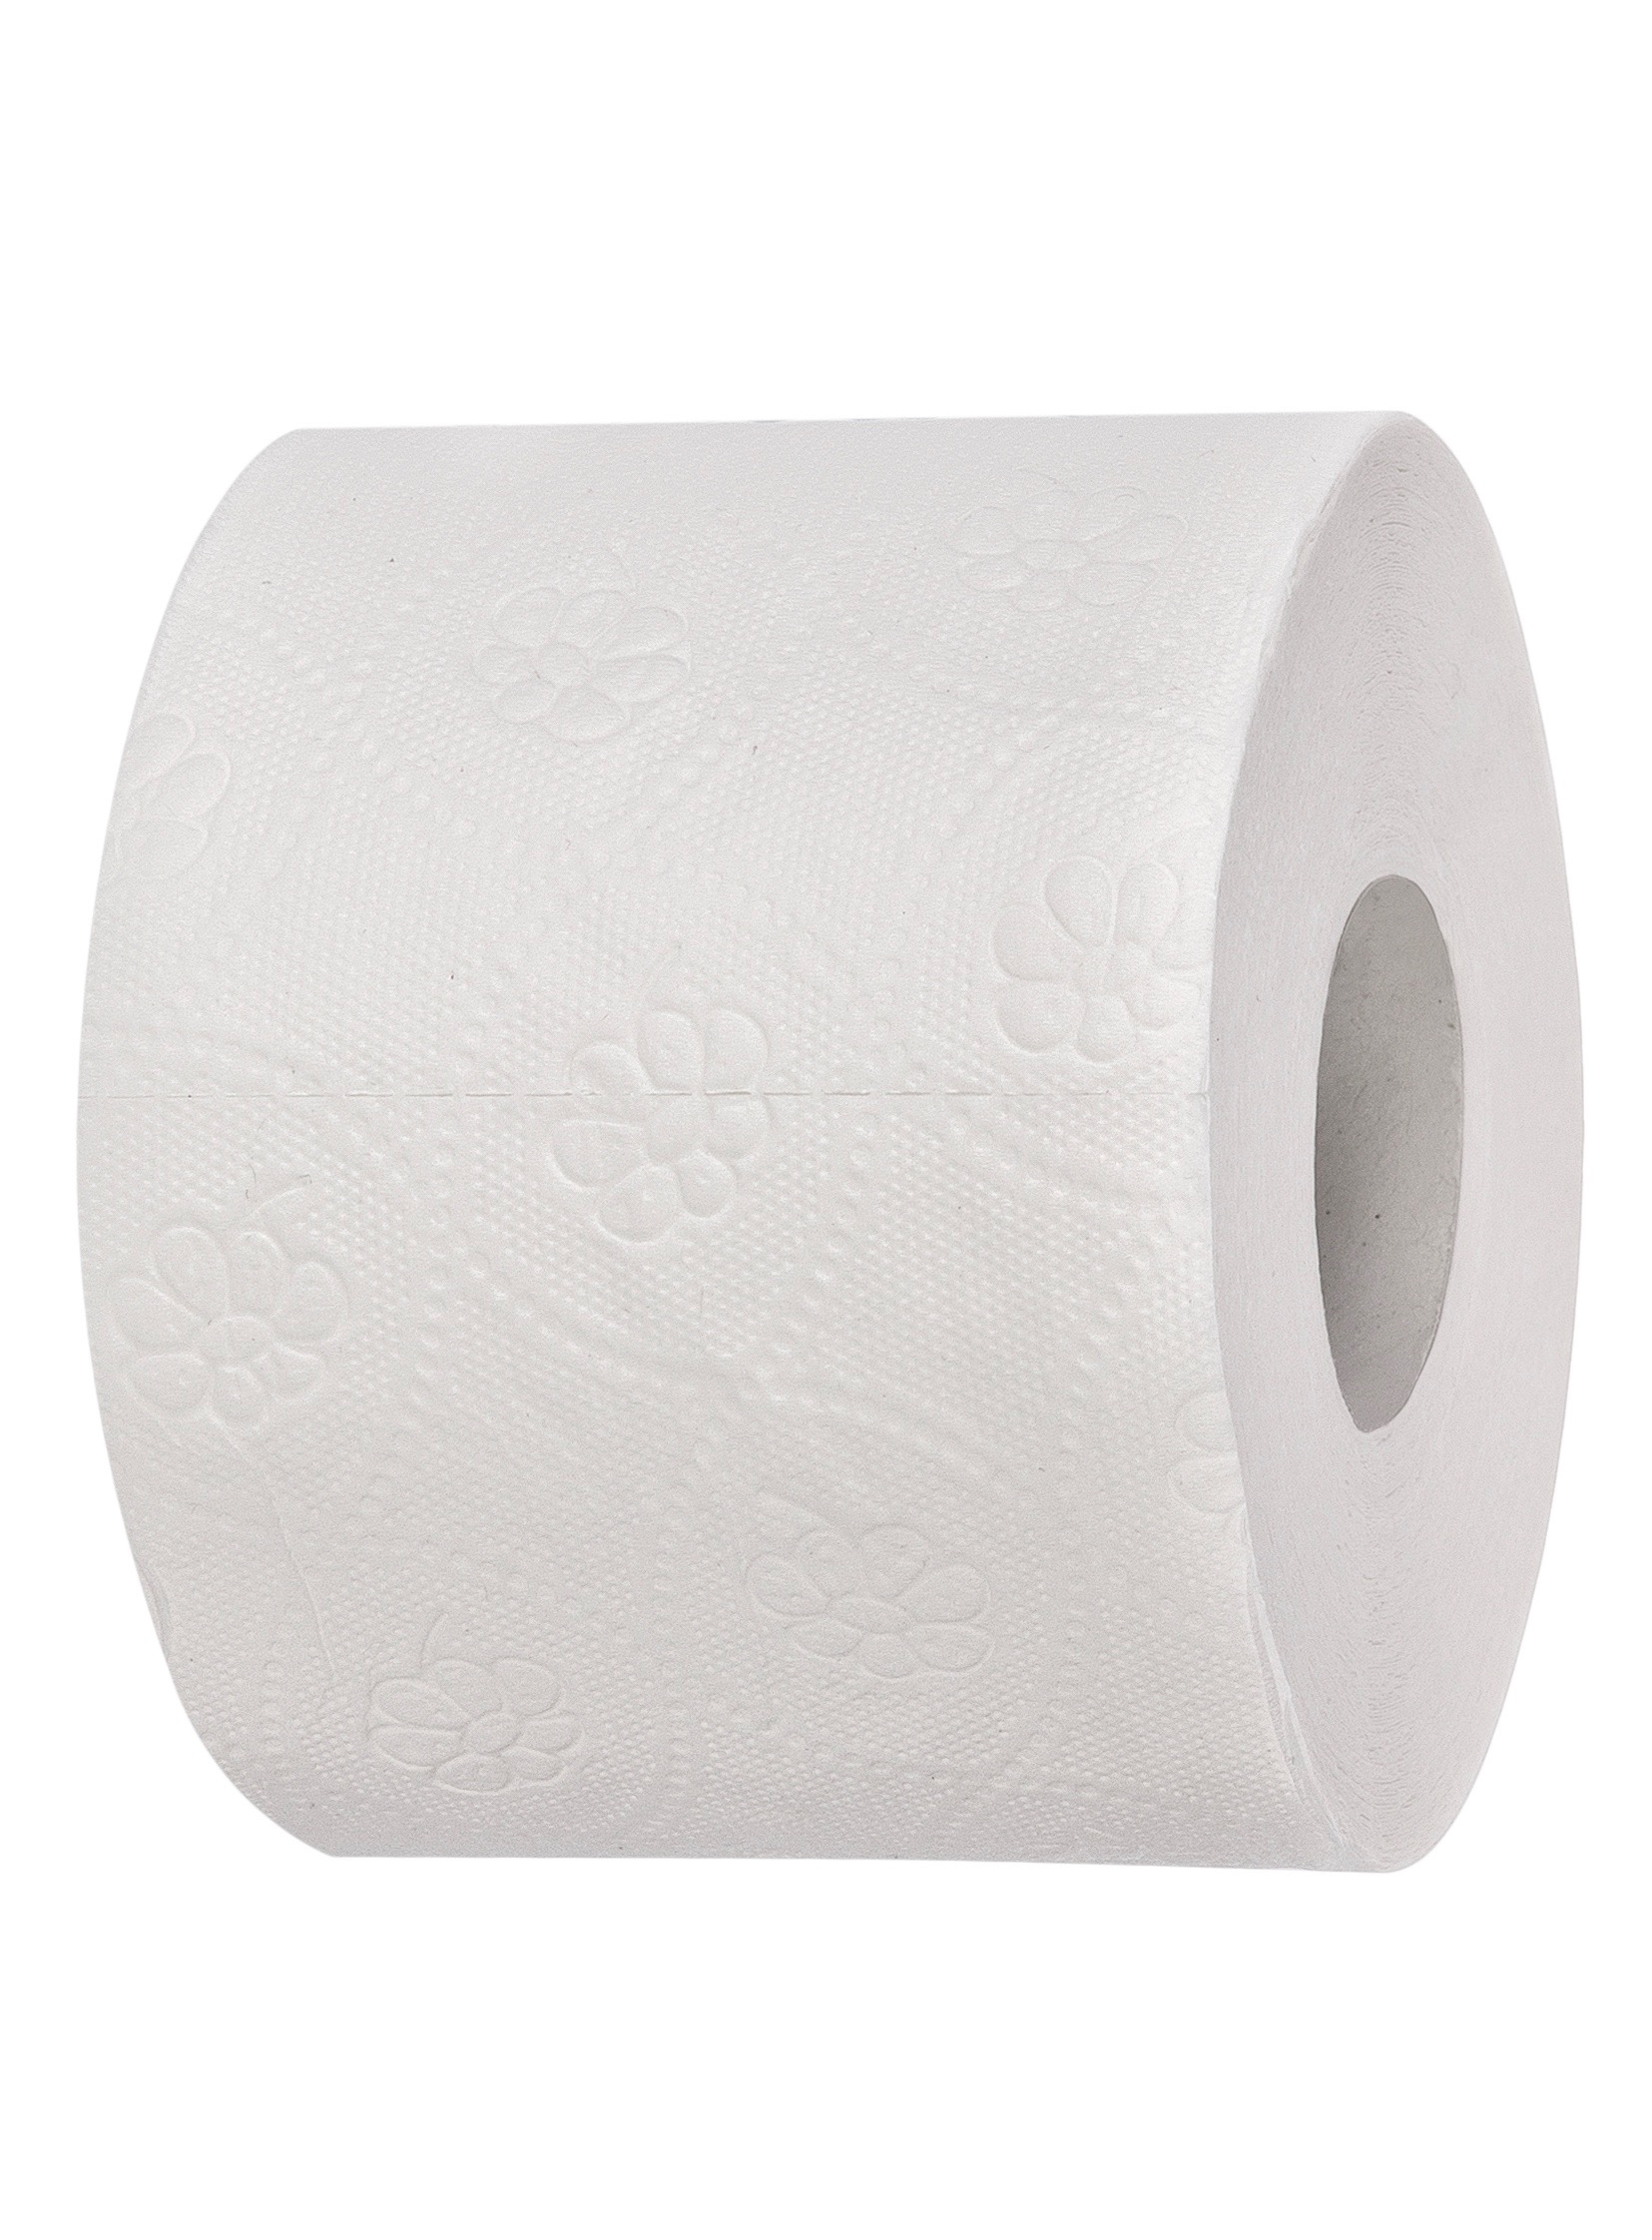 Toilettenpapier Kleinrolle, 72 Rollen, 3-lagig, 250 Blatt, Zellulose